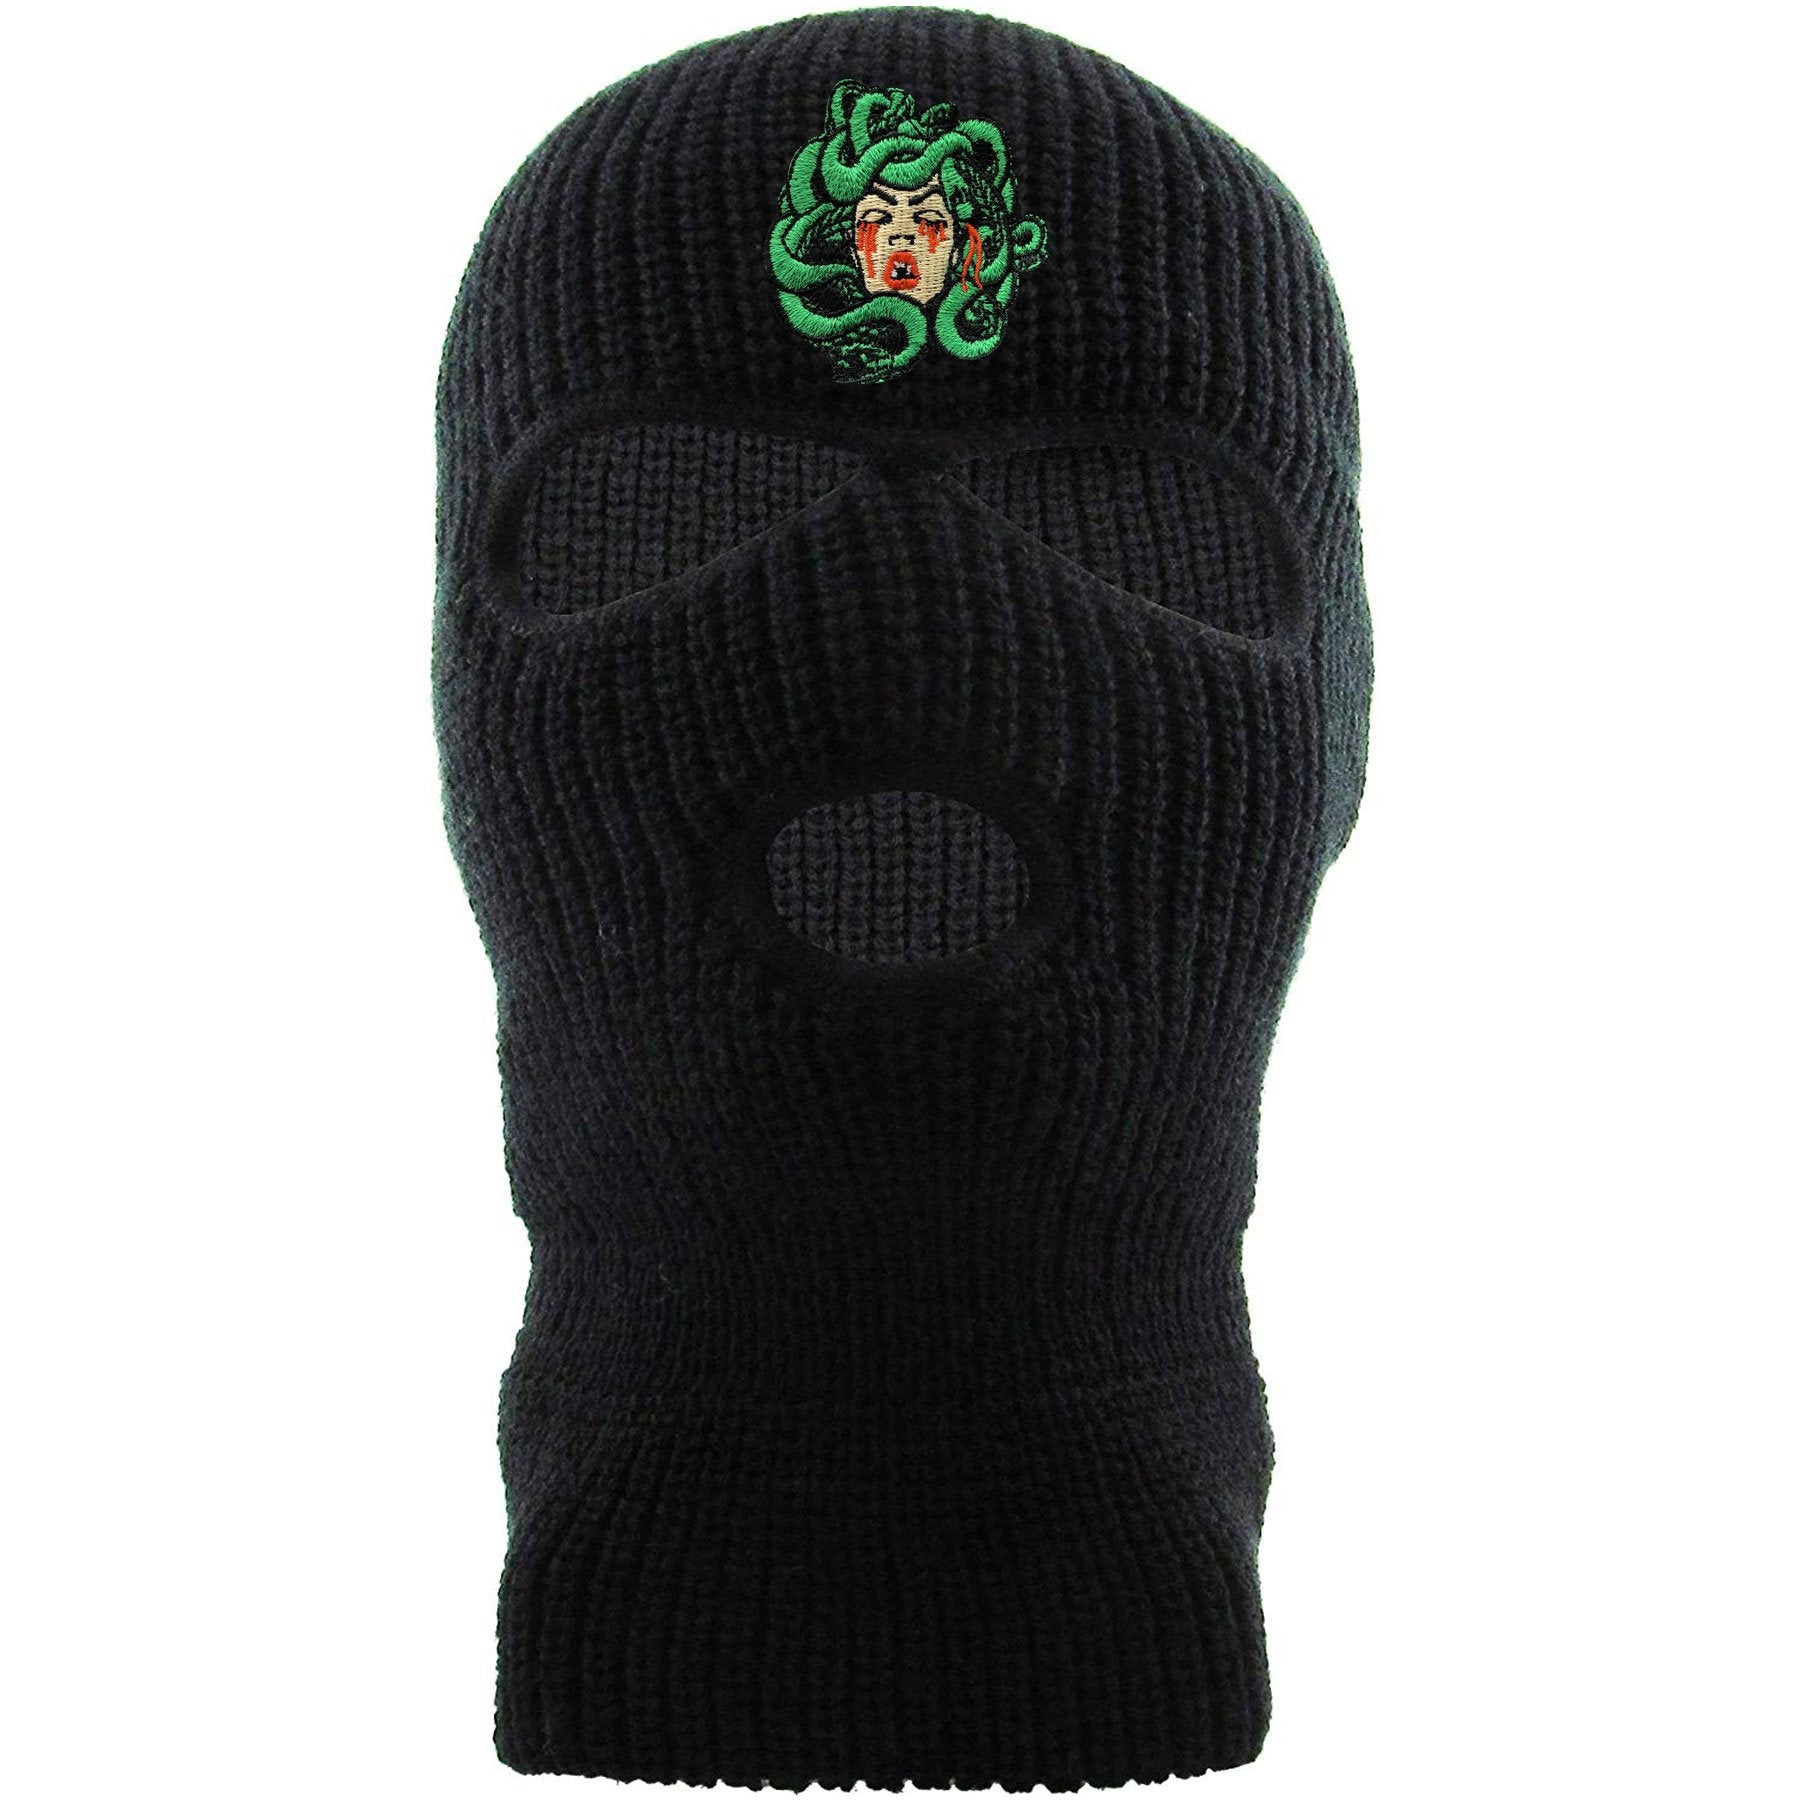 Embroidered on the front of the medusa black ski mask is the medusa logo